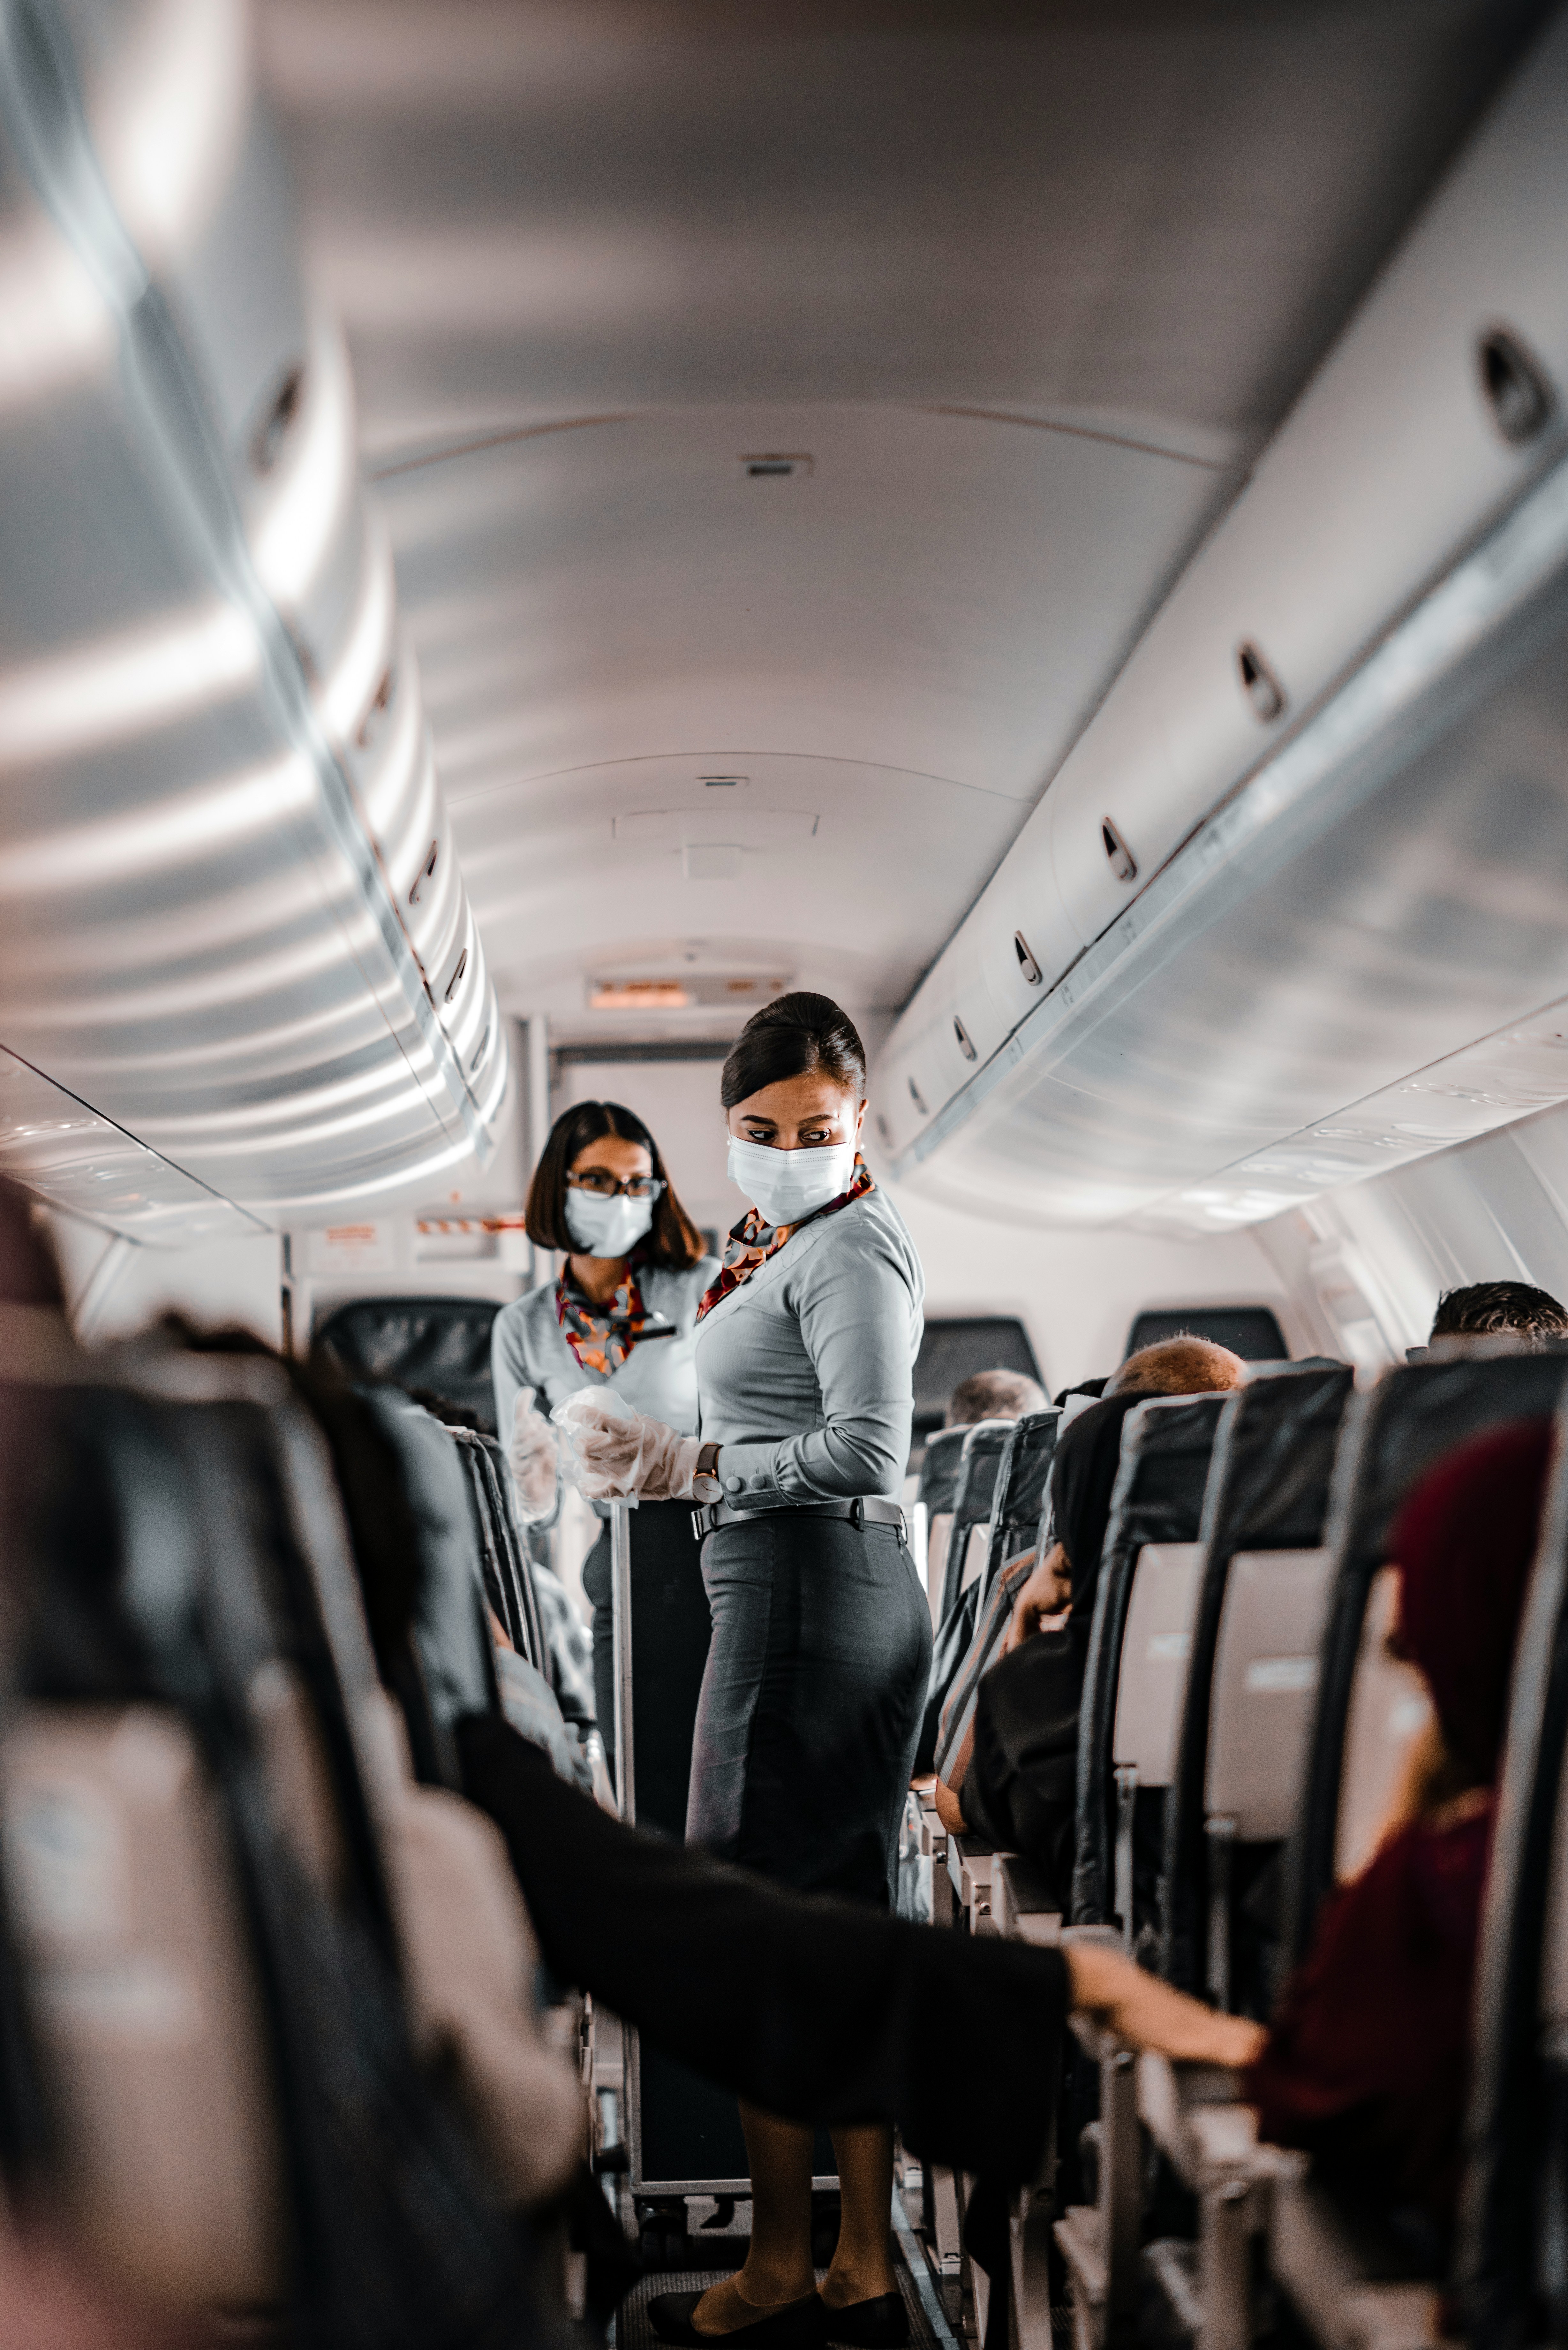 Flight attendants dealing with passengers | Source: Unsplash